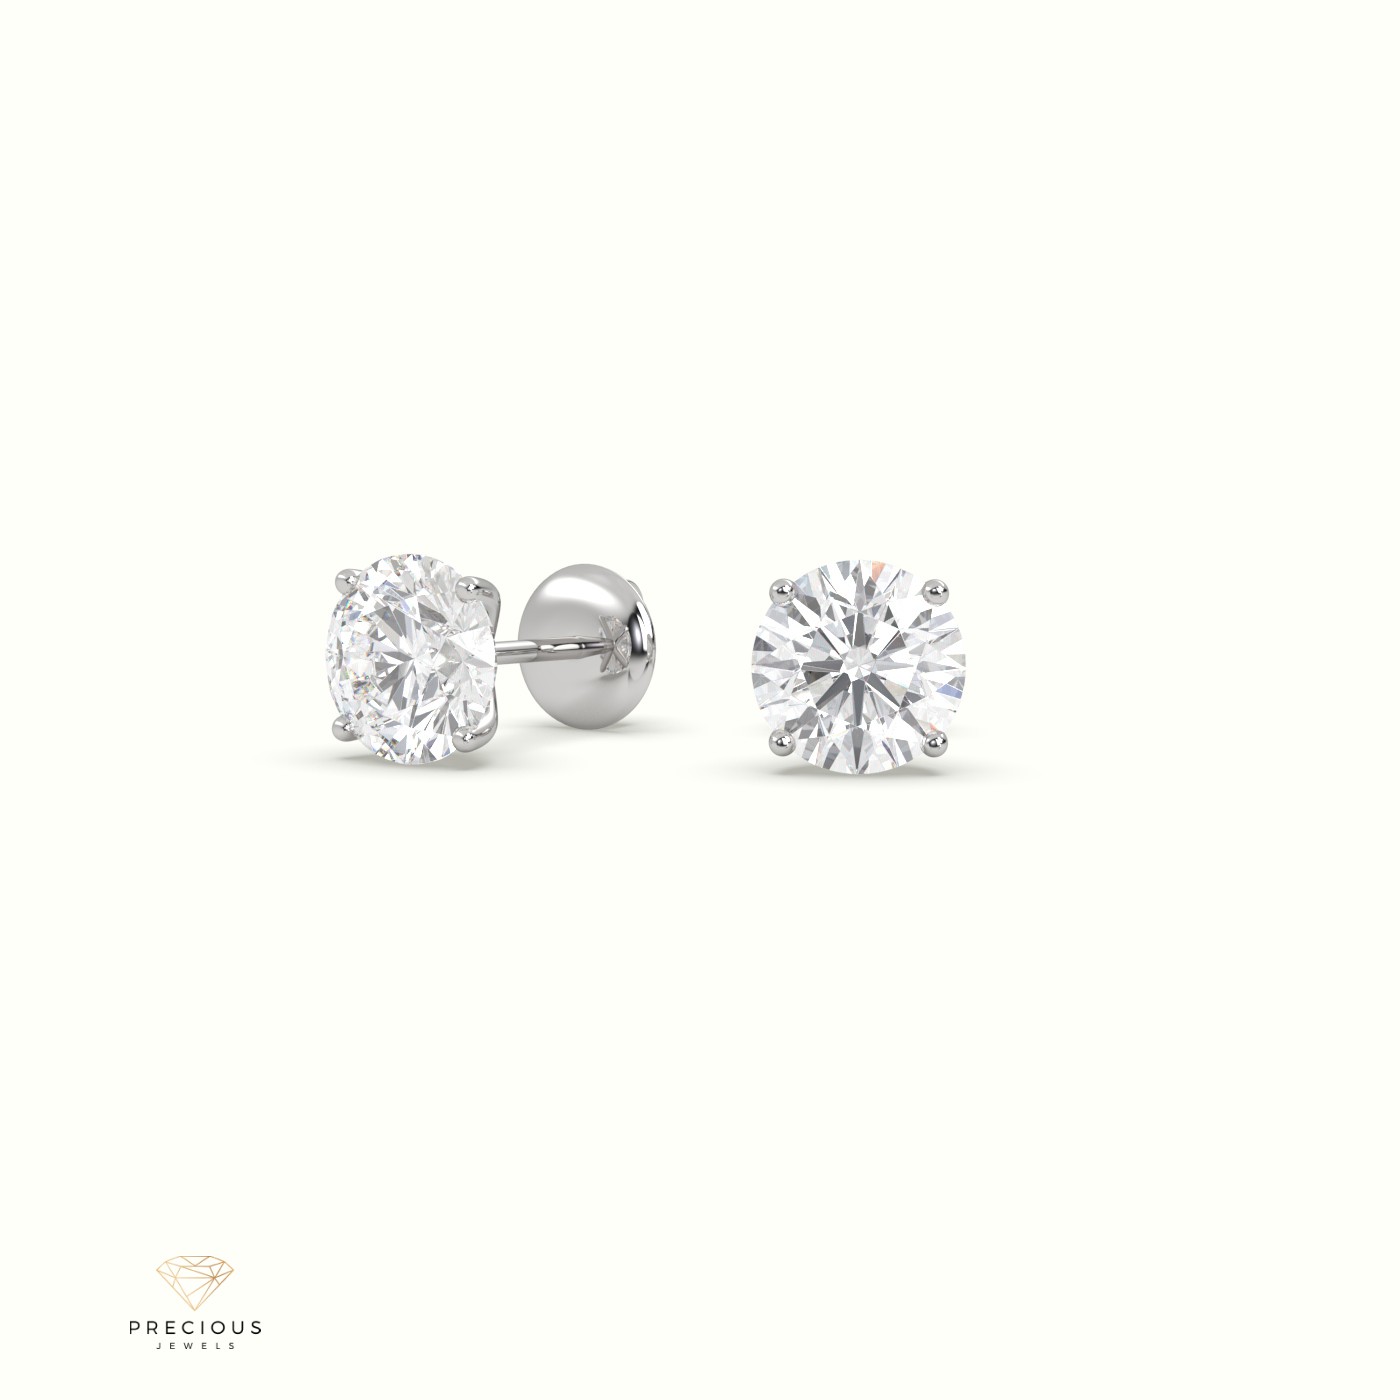 18k white gold 4 prongs round diamond studs earrings - free setting Photos & images